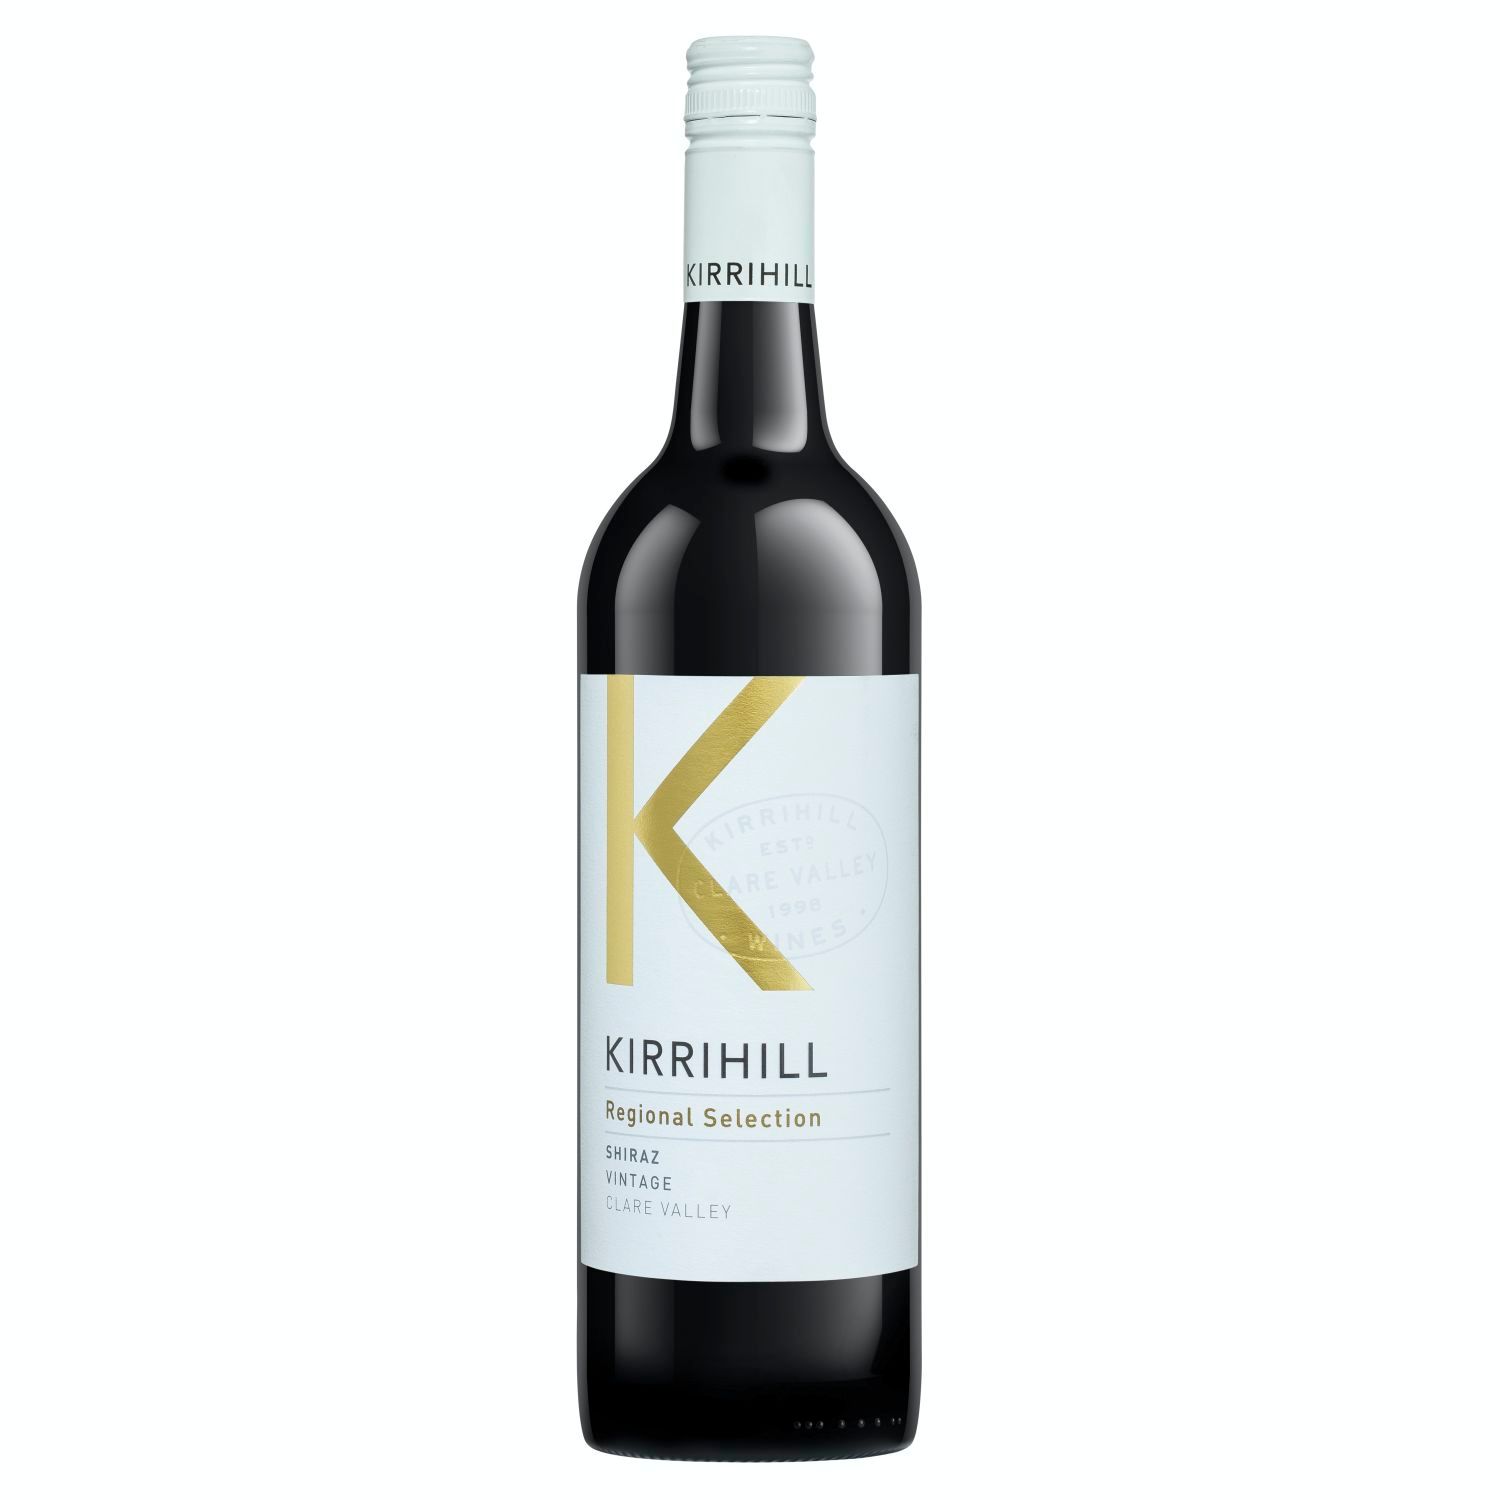 Kirrihill Regional Selection Shiraz Vintage 750mL Bottle